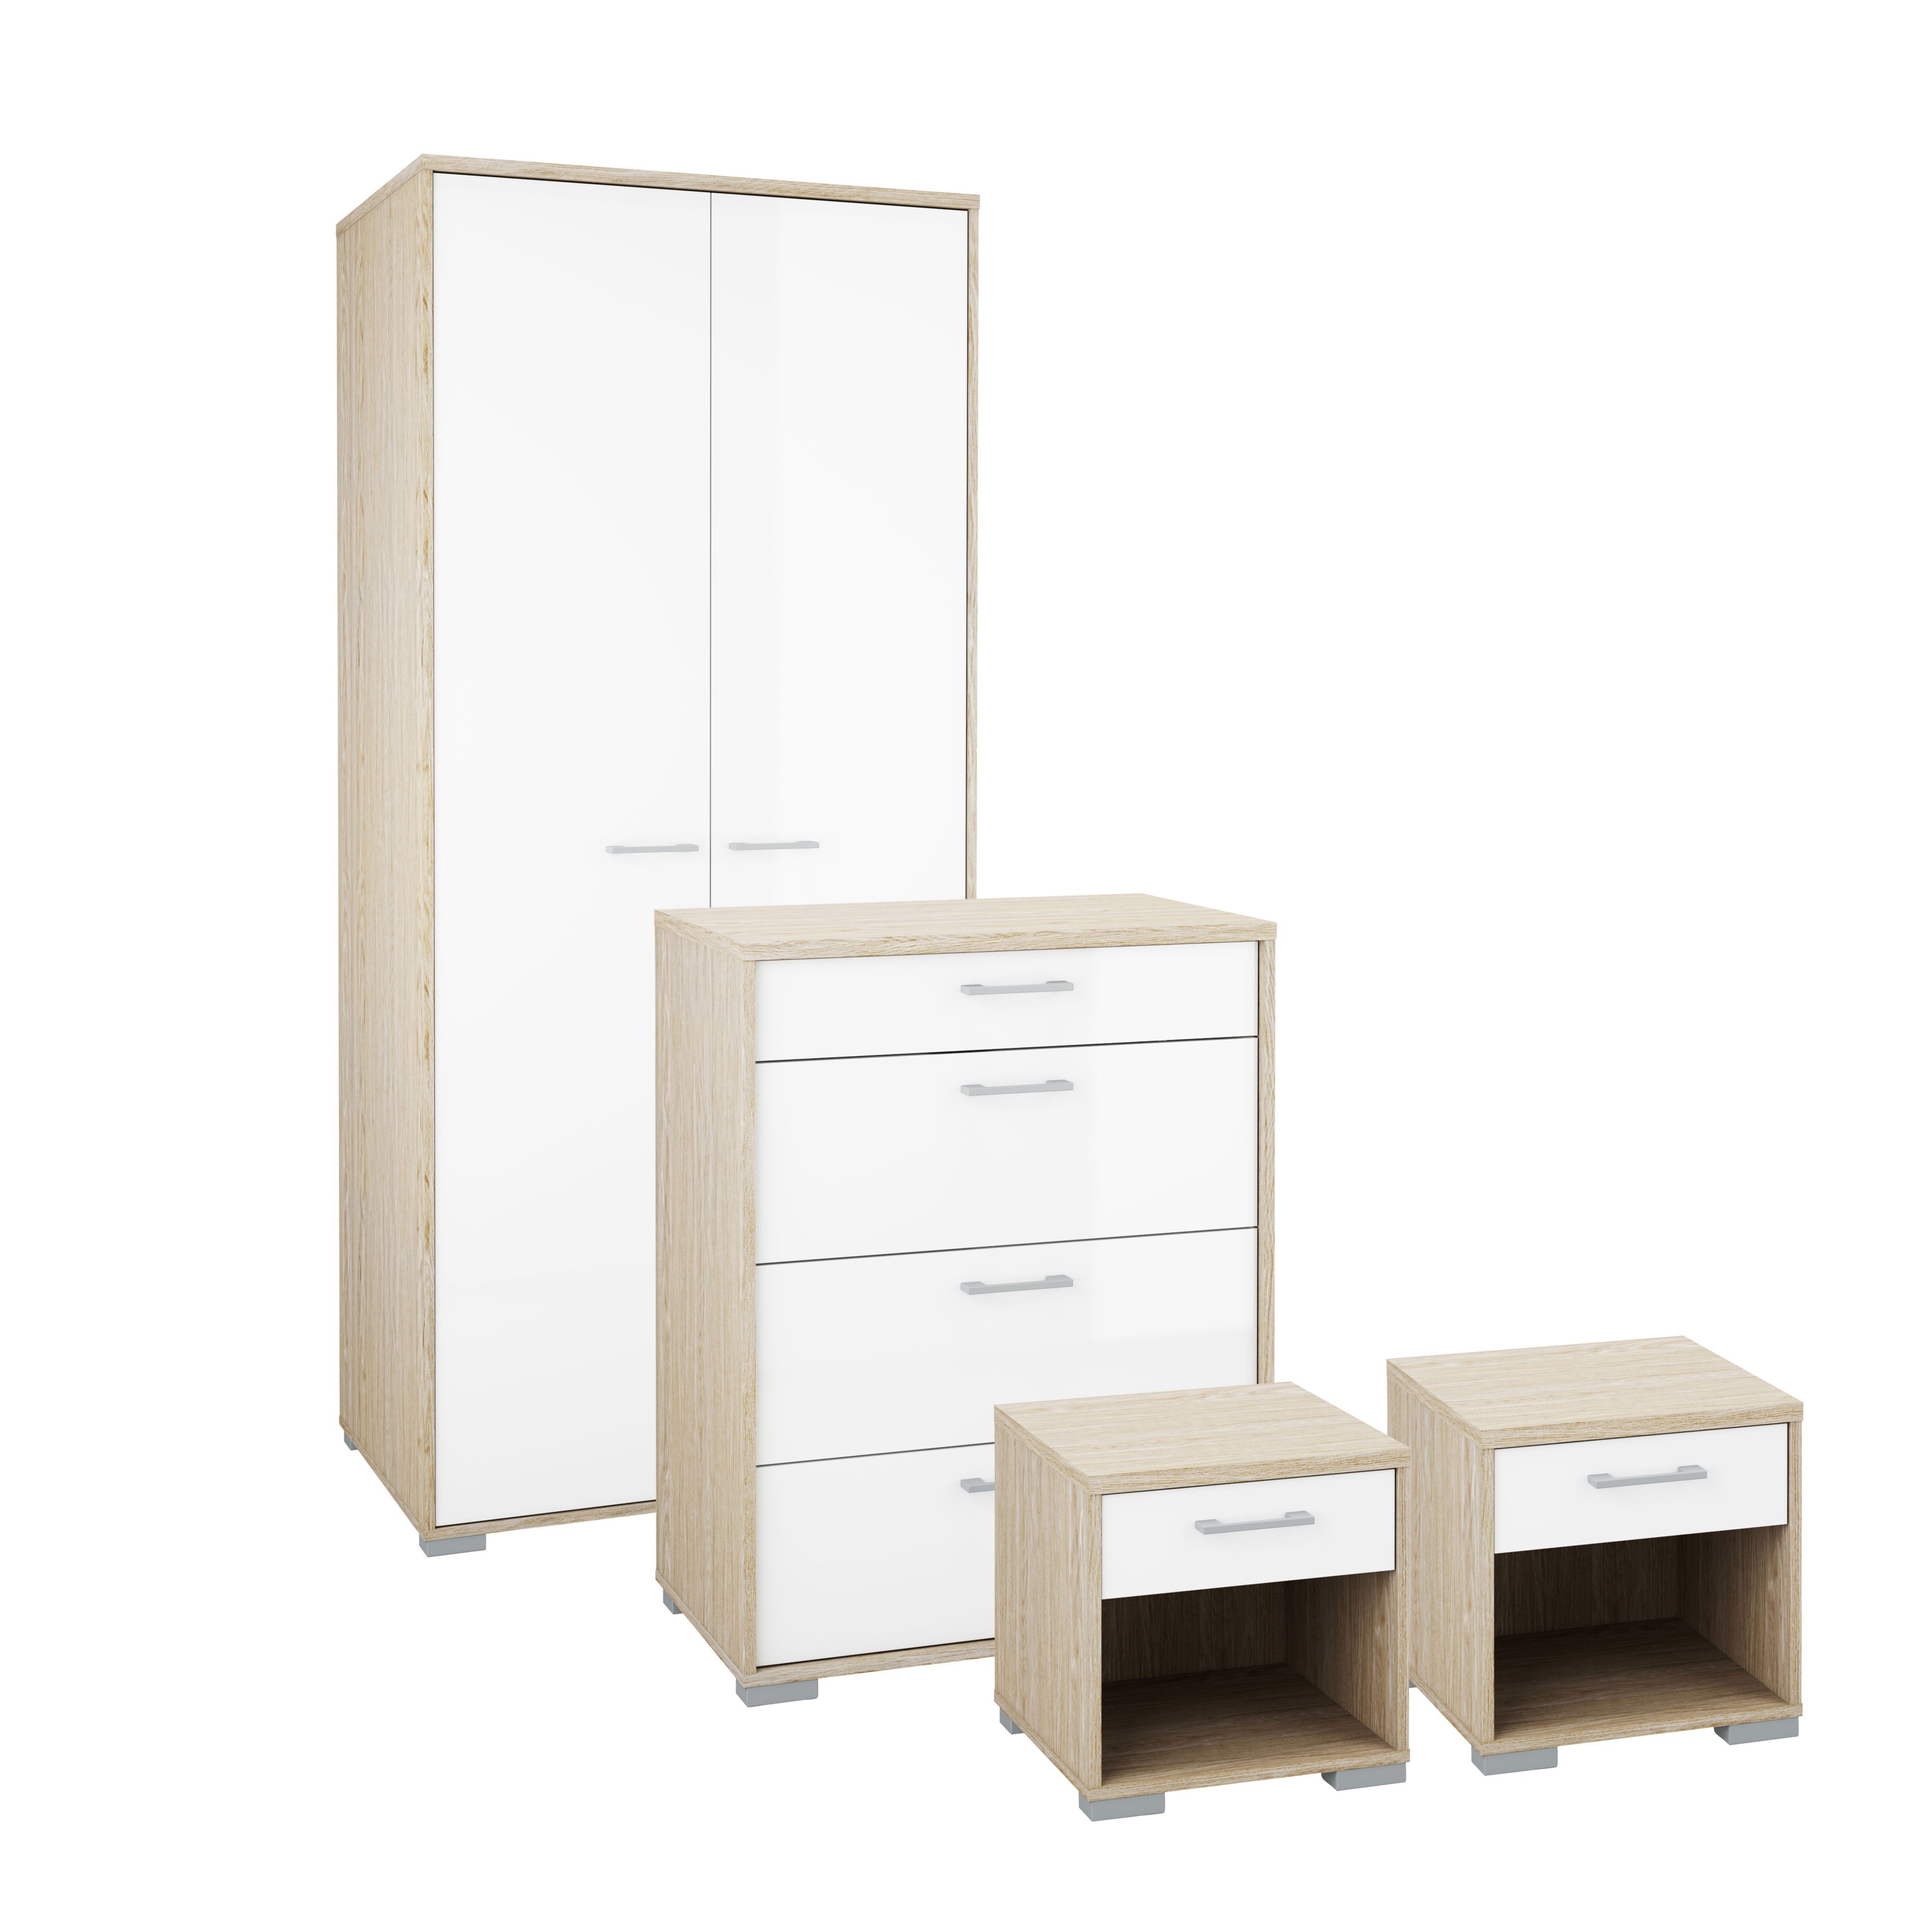 Evie Gloss white oak effect 4 piece Bedroom furniture set